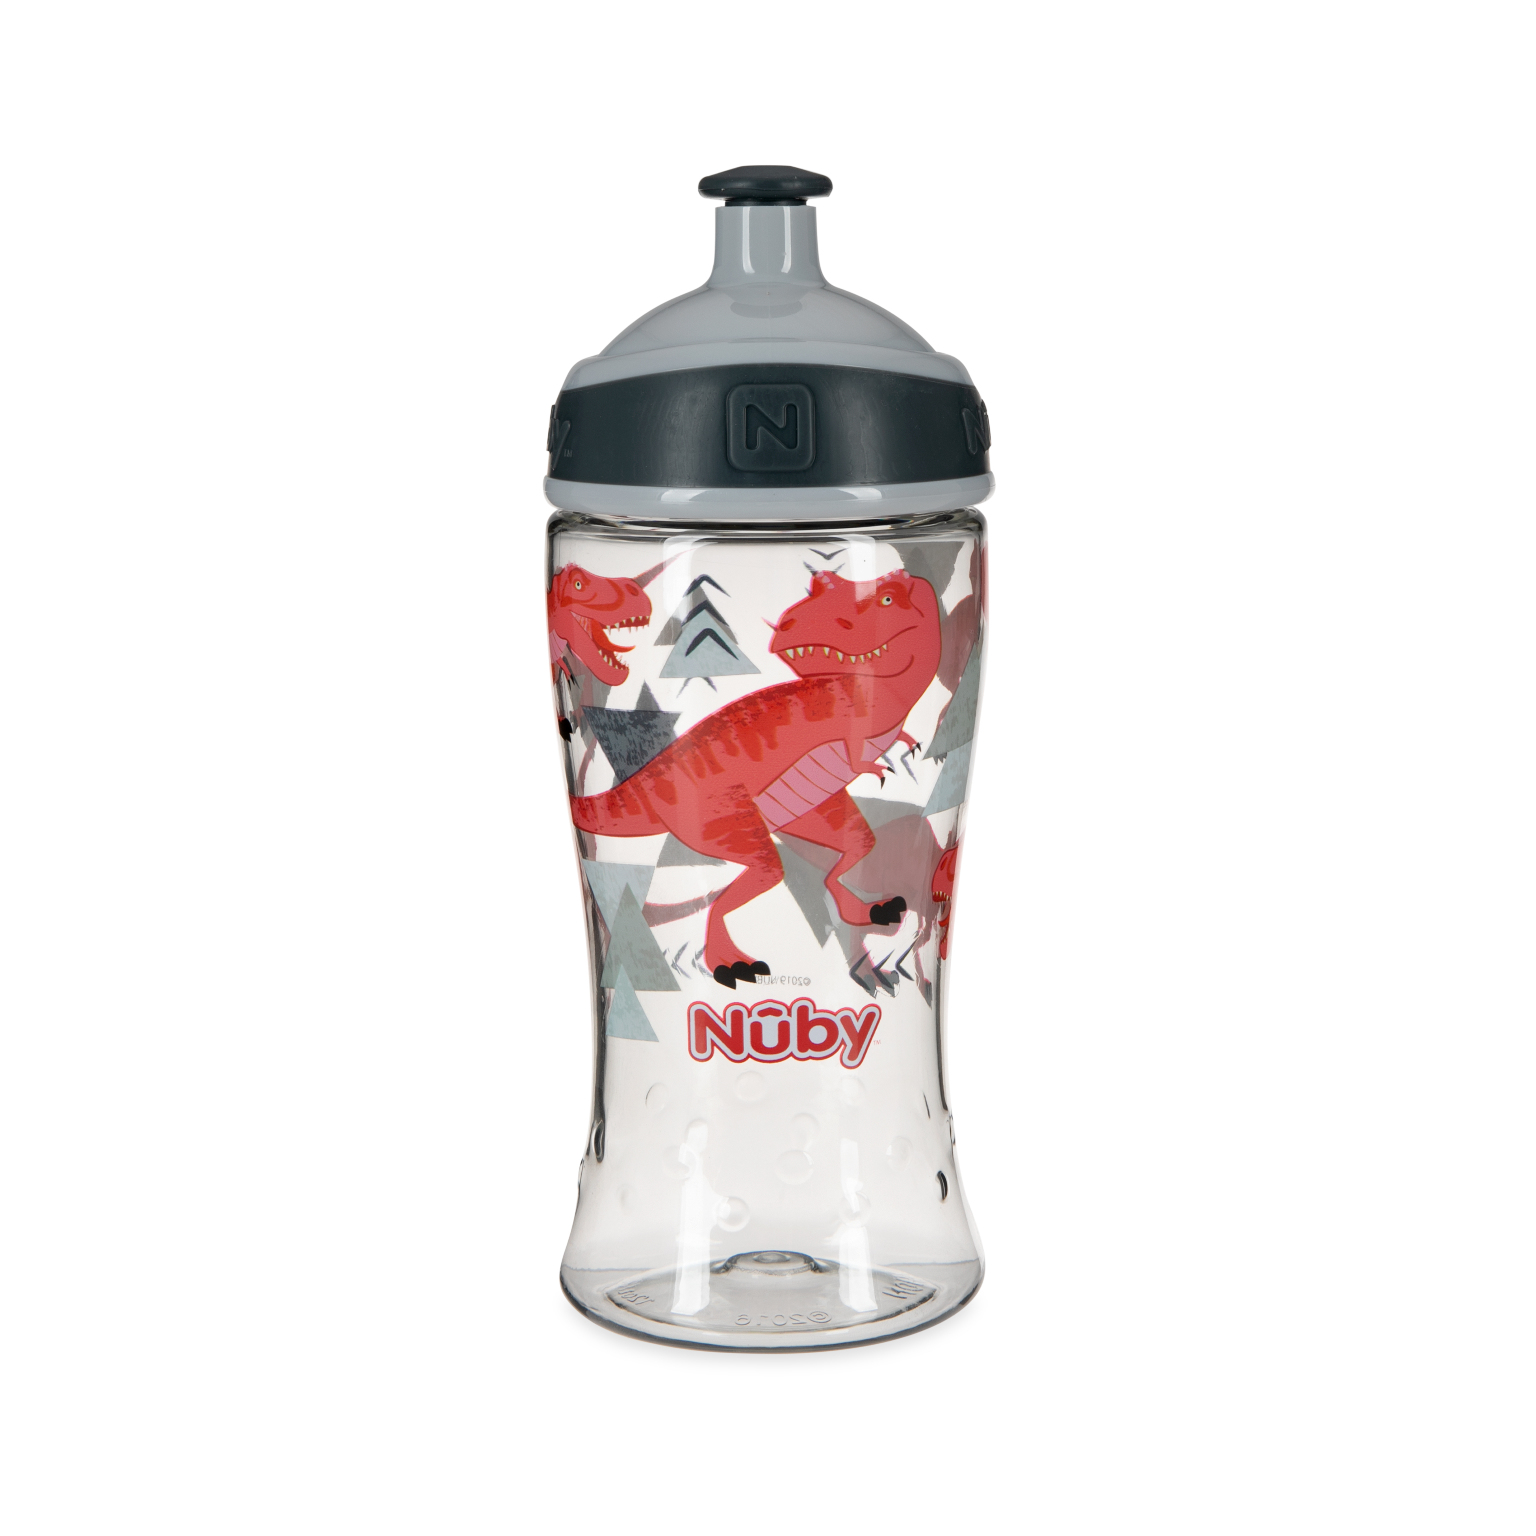 Nuby Pop Up Water Bottles - Assorted Prints, 12 oz